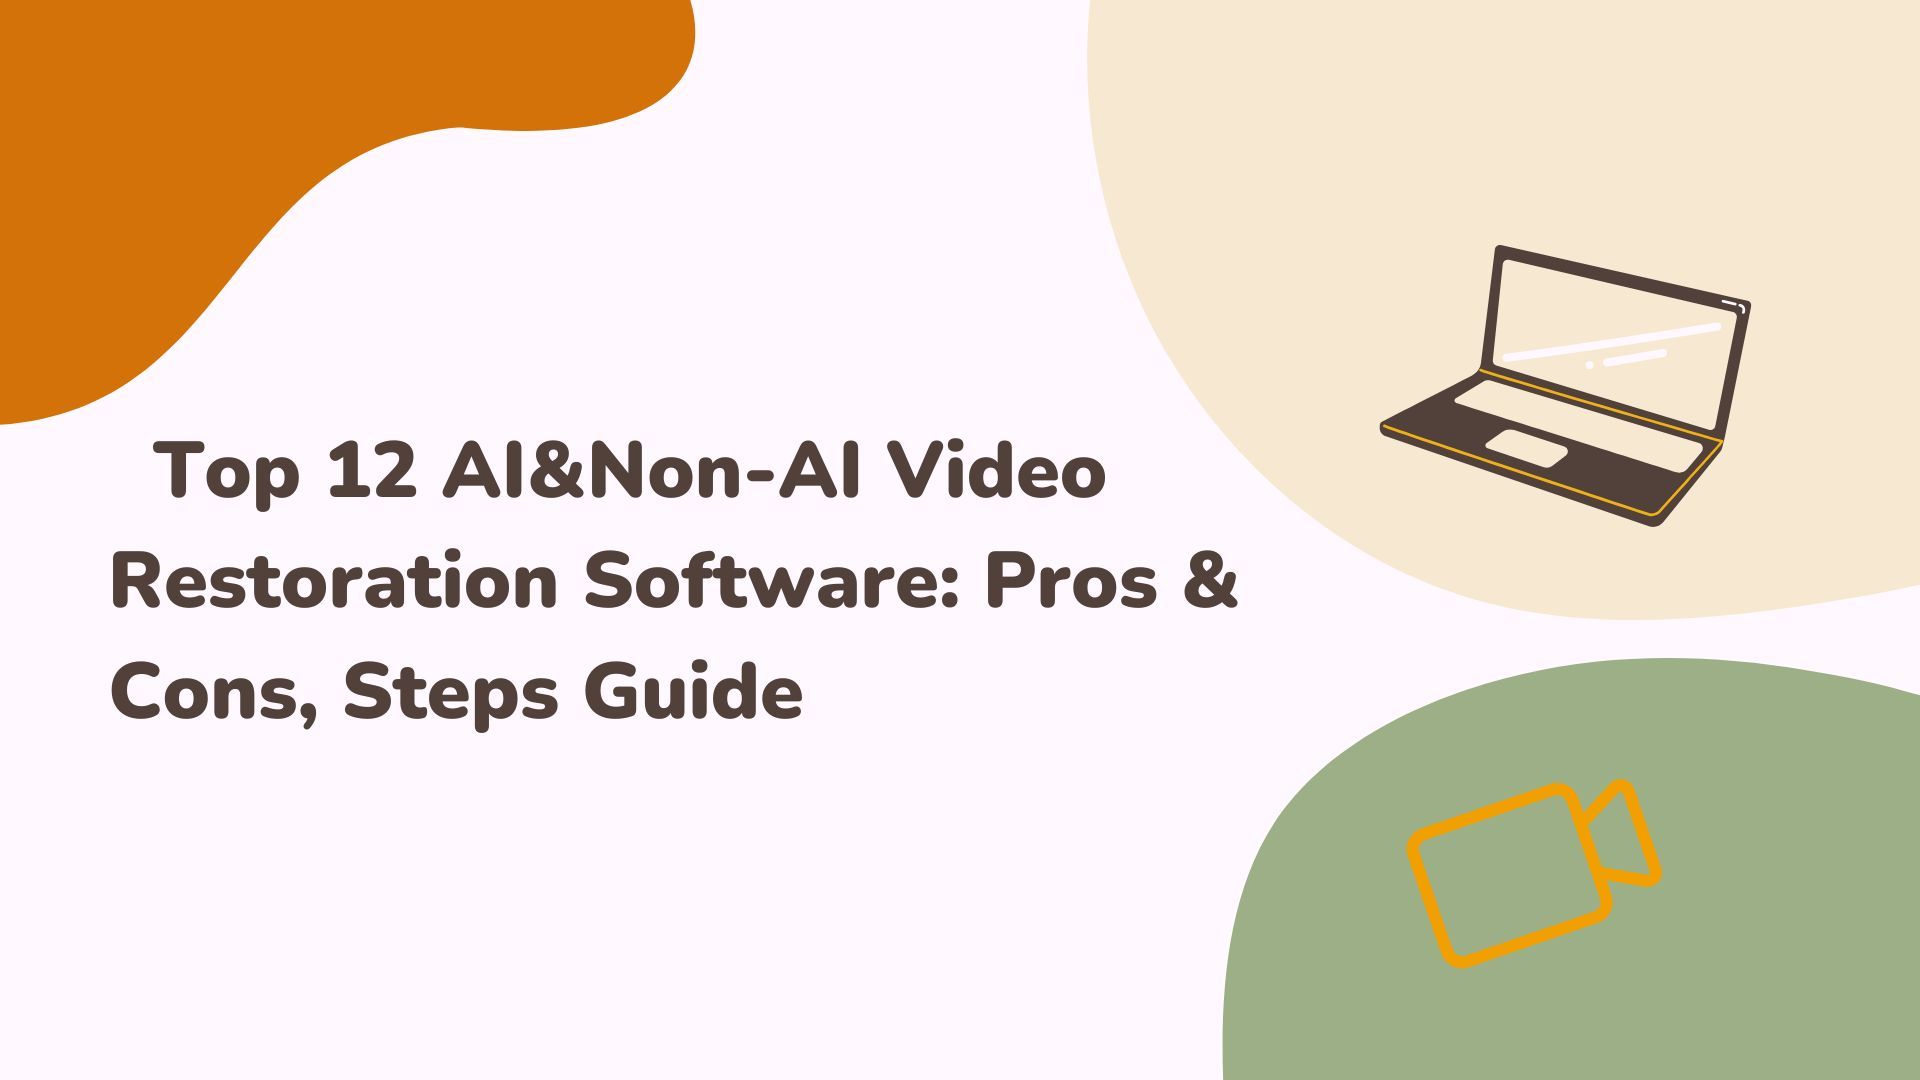   Top 12 AI&Non-AI Video Restoration Software: Pros & Cons, Steps Guide